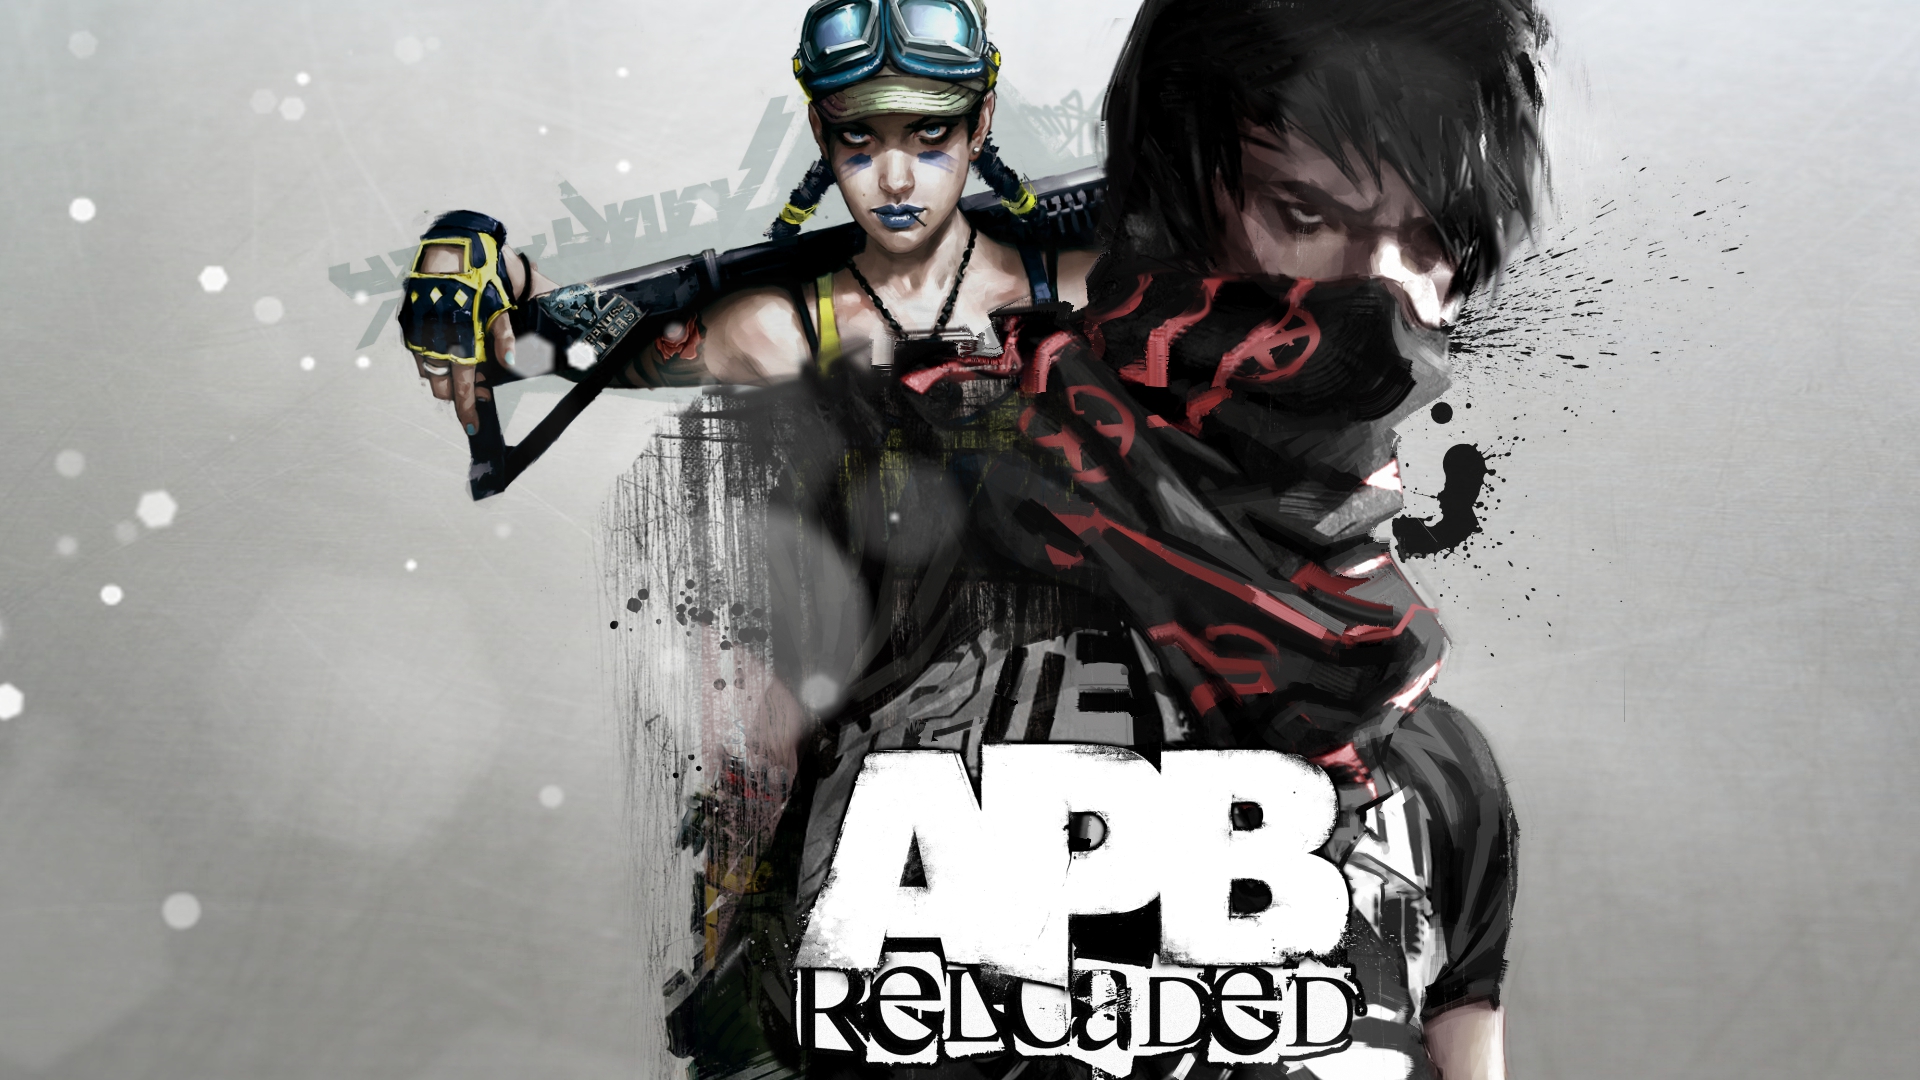 APB Reloaded HD wallpapers, Desktop wallpaper - most viewed